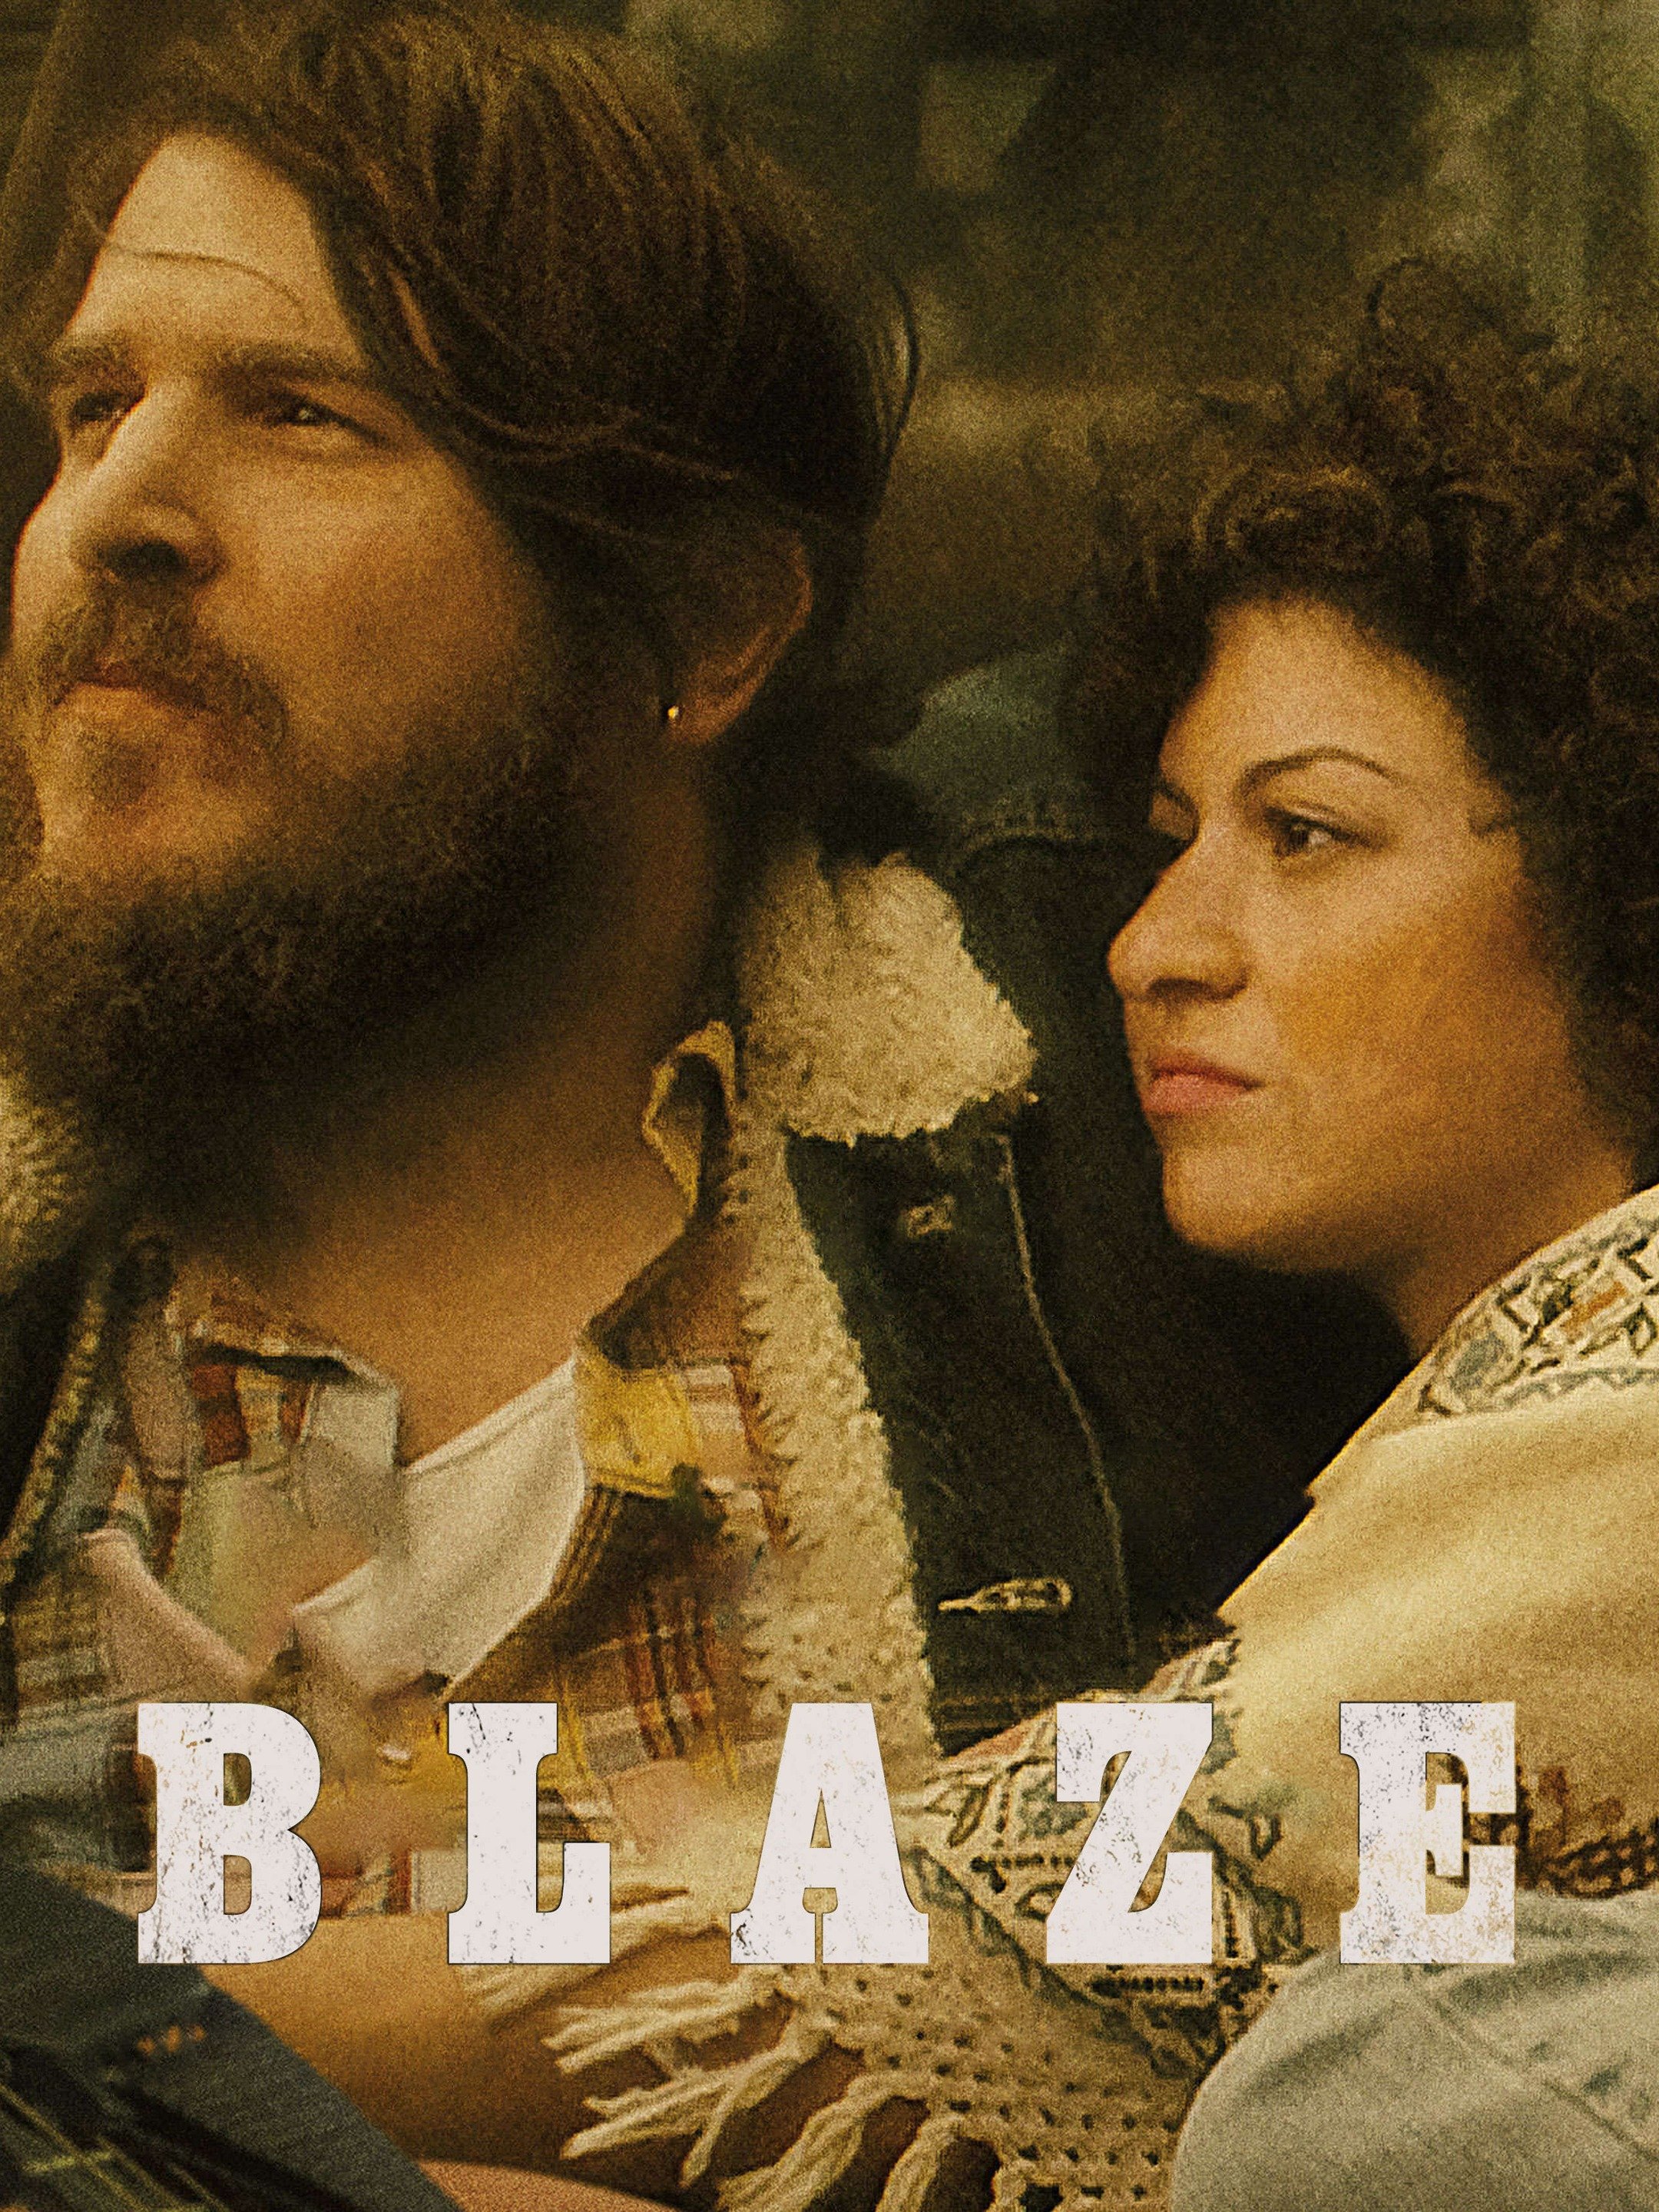 Blaze: Trailer 1 - Trailers & Videos - Rotten Tomatoes